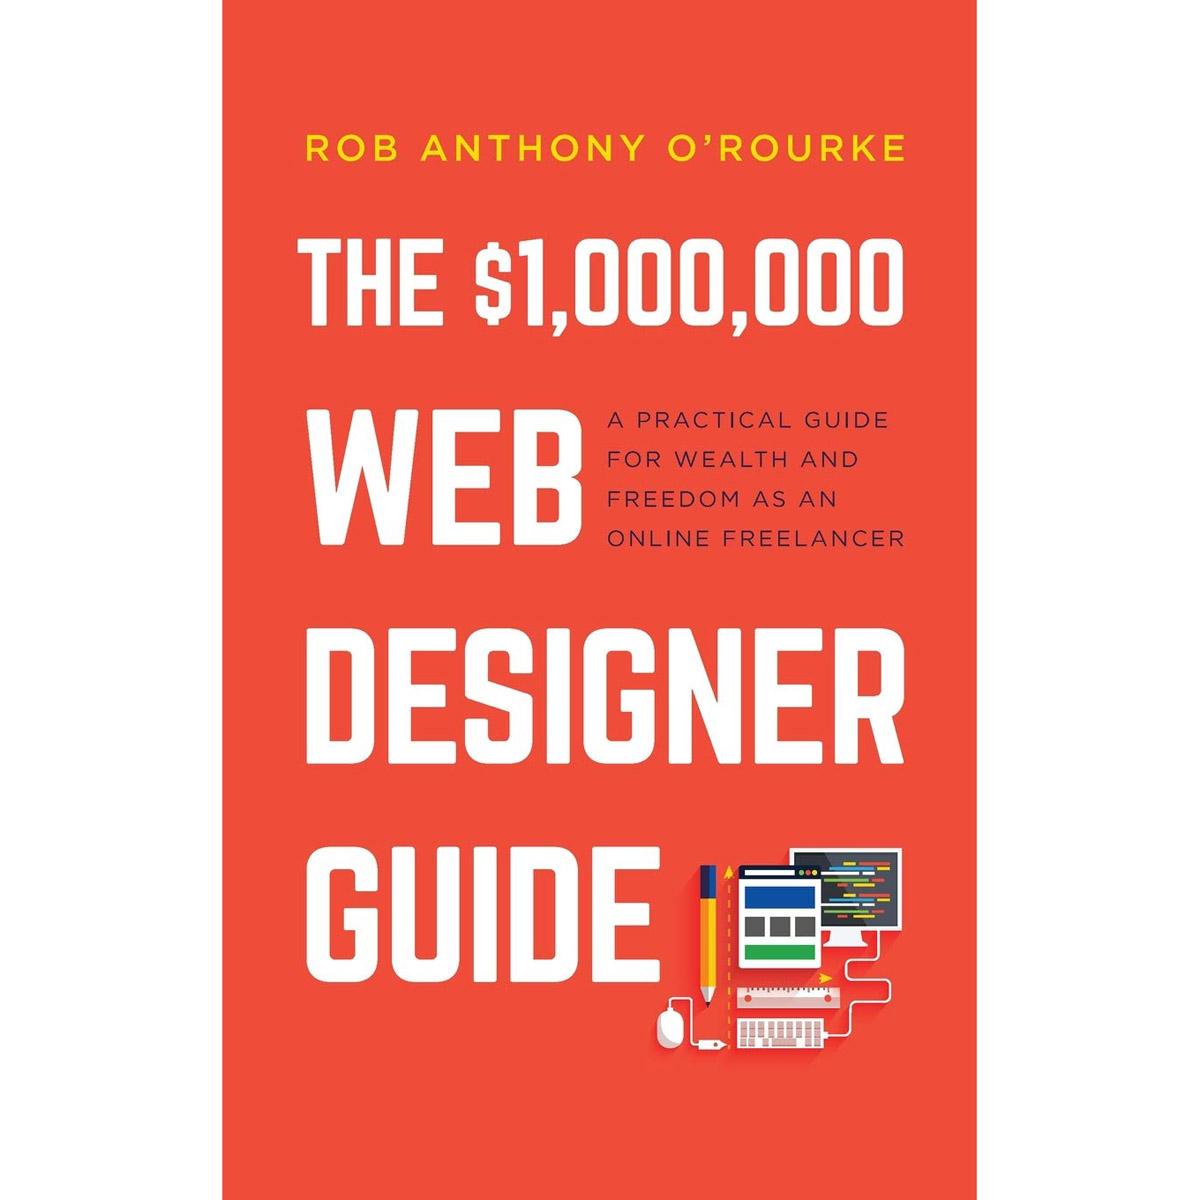 Million Dollar Web Designer Guide eBook for Free